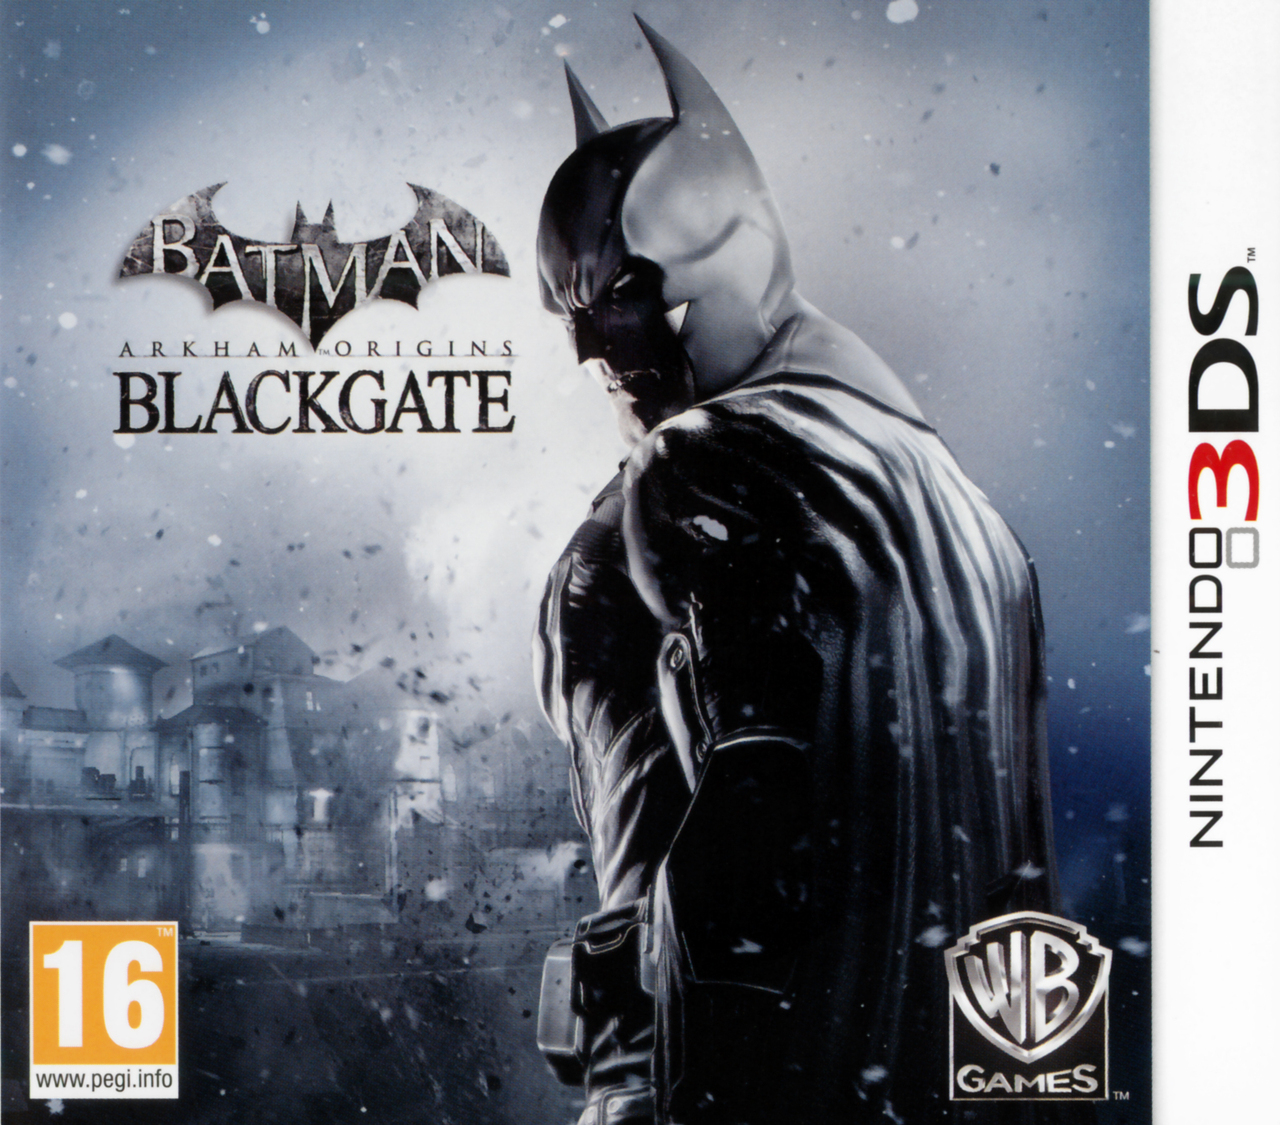 jaquette du jeu vidéo Batman: Arkham Origins Blackgate